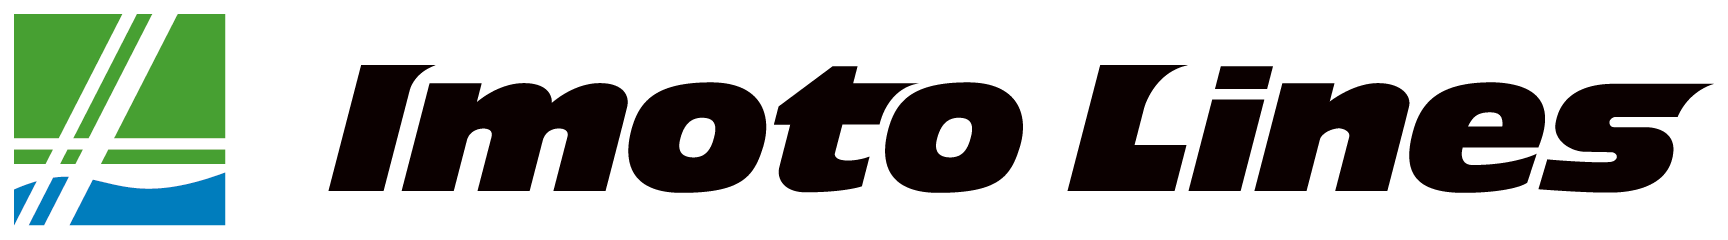 Imoto Lines logo